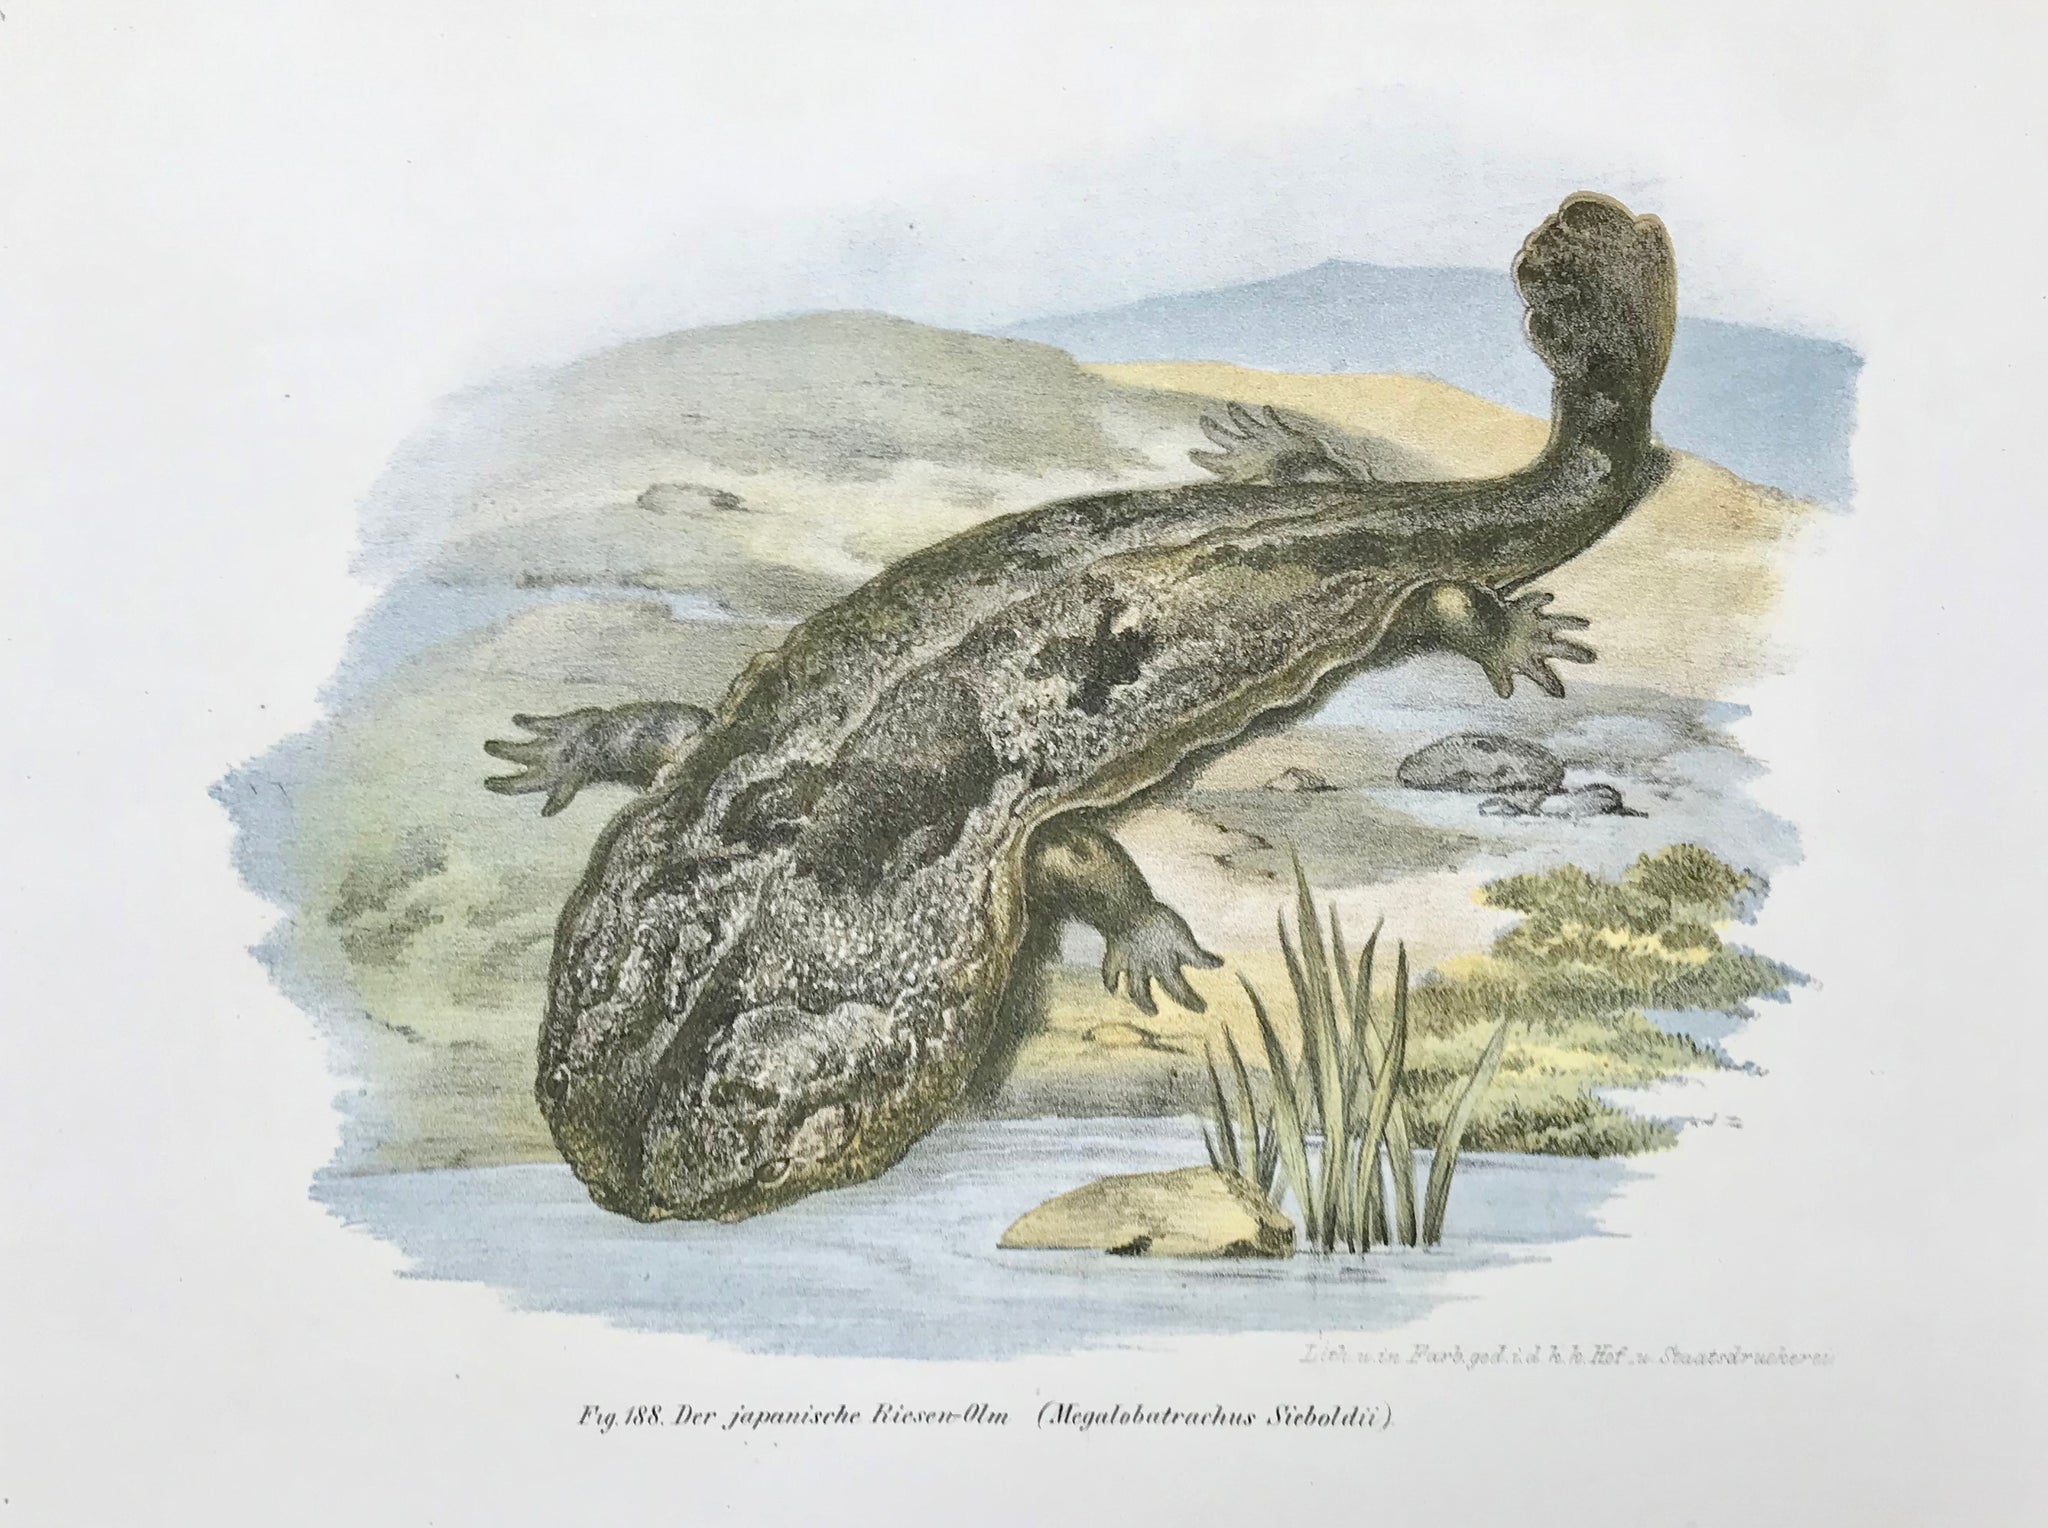 Der Japanische Riesen - Olm (Megalobatrachus Sieboldii)  Lithographs printed in color by the k.k. Hof u. Staatsdruckerei ca 1875.  Page size :24 x 31 cm ( 9.4 x 12.2 ")